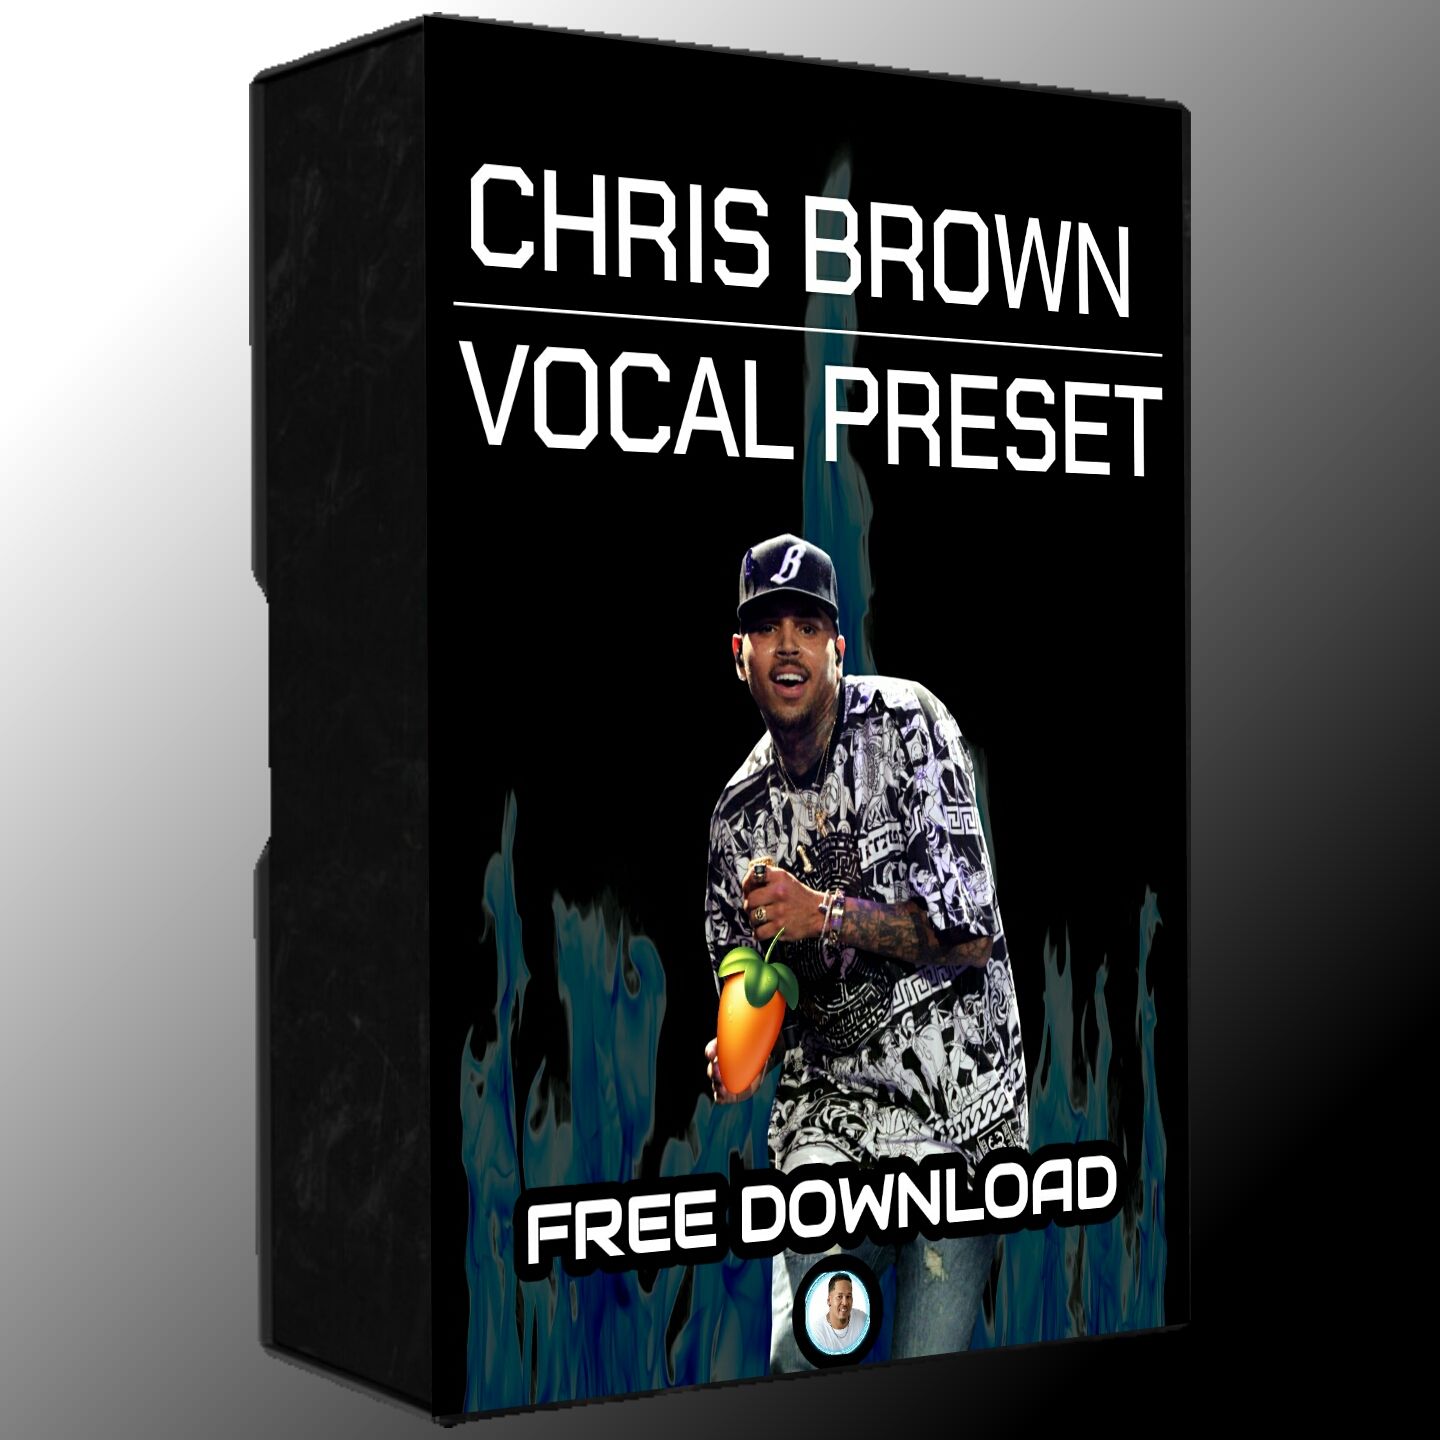 Clear Rap Vocal Preset for FL Studio